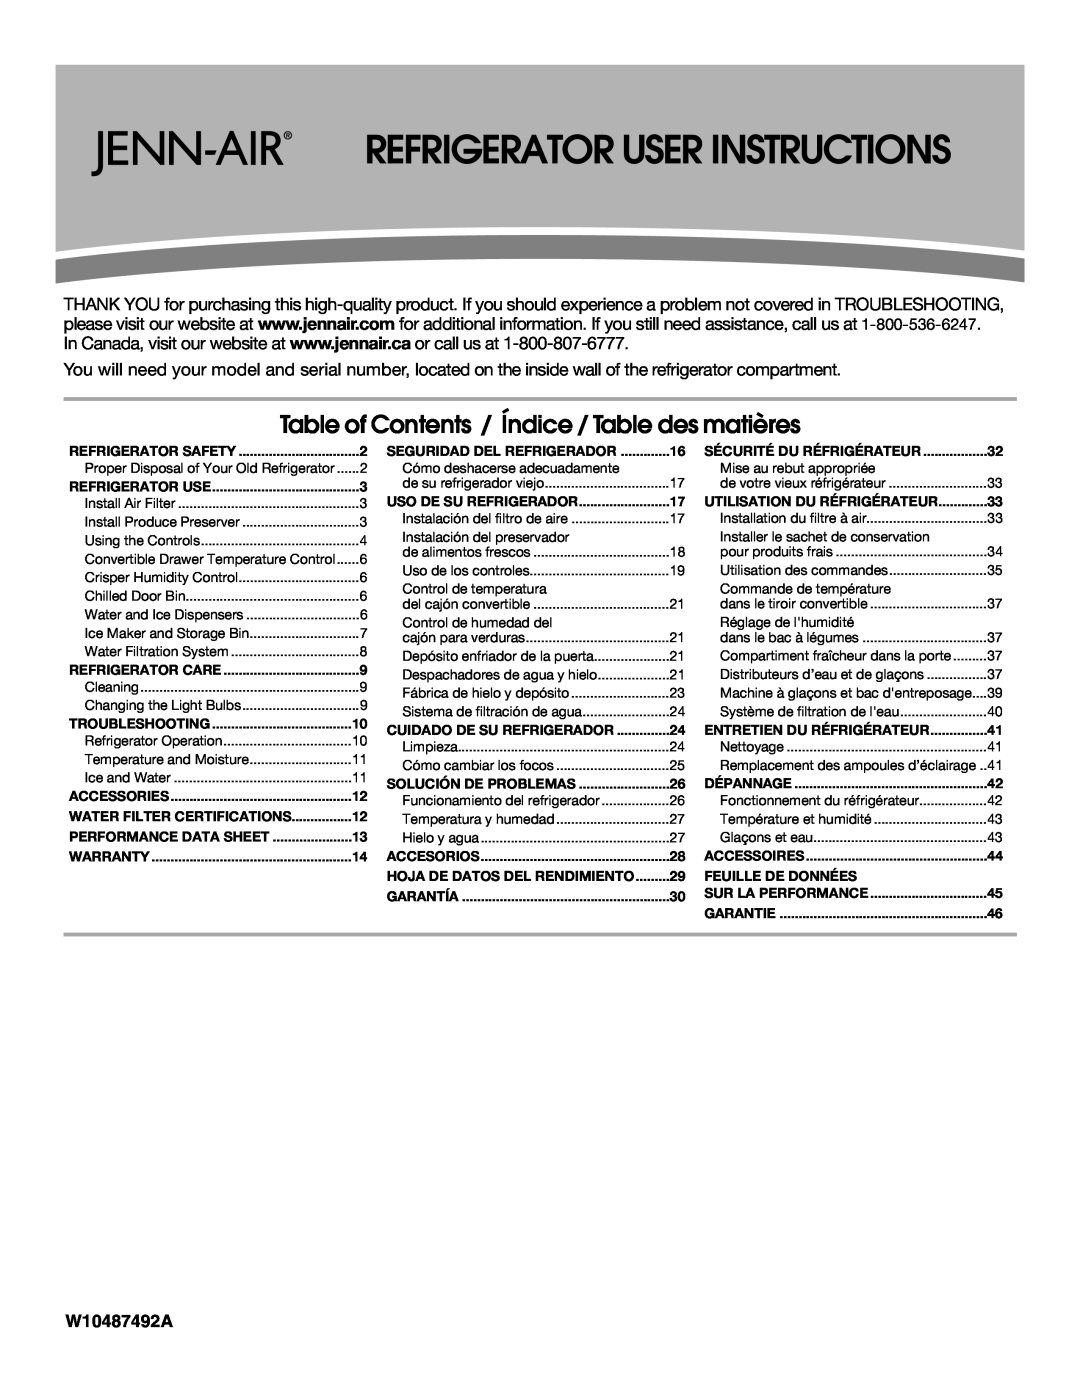 Jenn-Air W10487492A warranty Table of Contents / Índice / Table des matières, Refrigerator User Instructions 